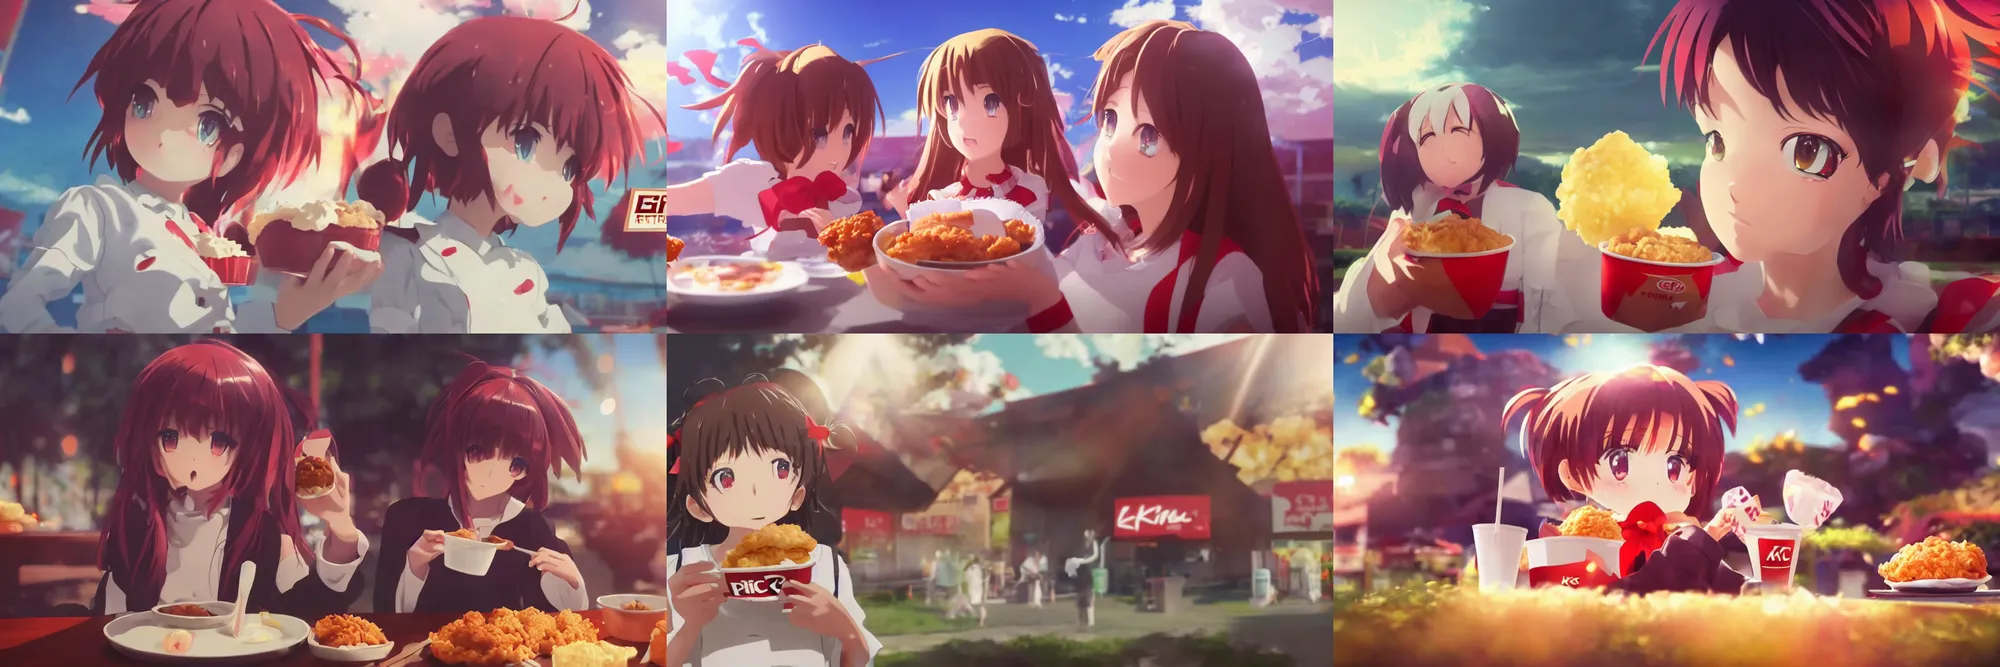 Prompt: kawaii girl eating KFC, behind is KFC heaven, epic cinematic still, dynamic perspective, anime style, beautiful volumetric light